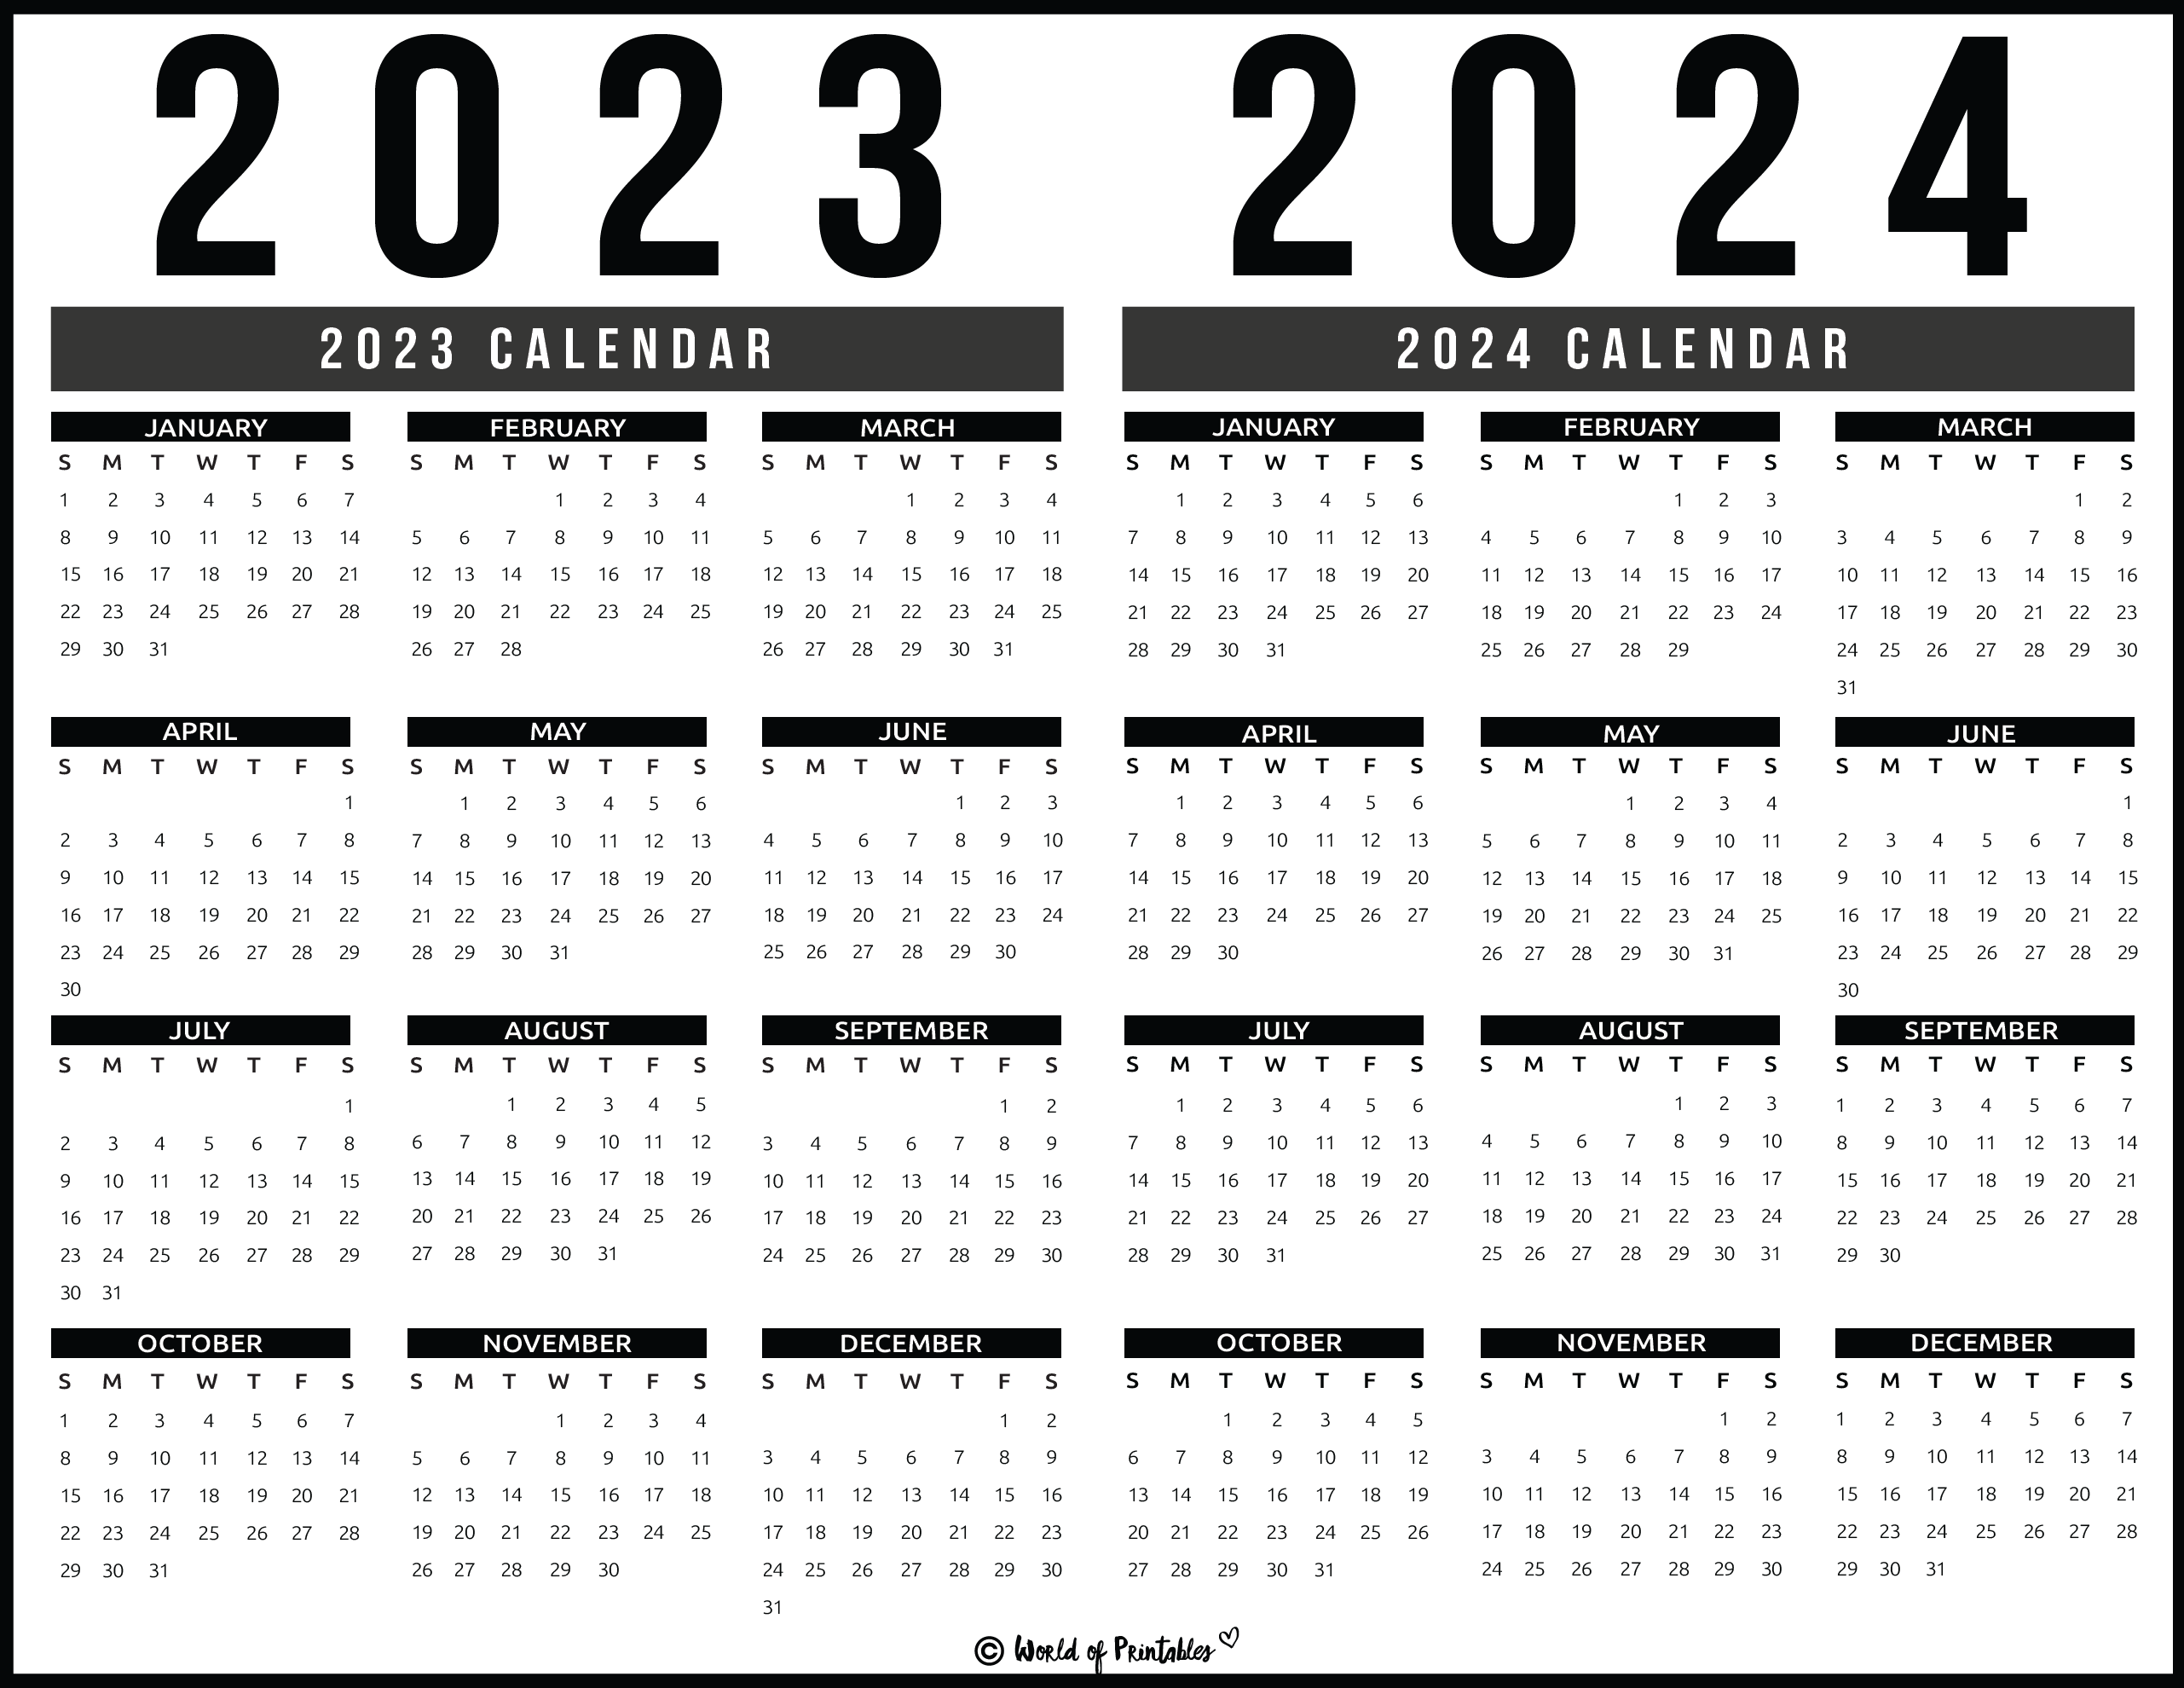 2023 2024 Calendar Free Printables - World Of Printables for Free Printable Calendar 2023 And 2024